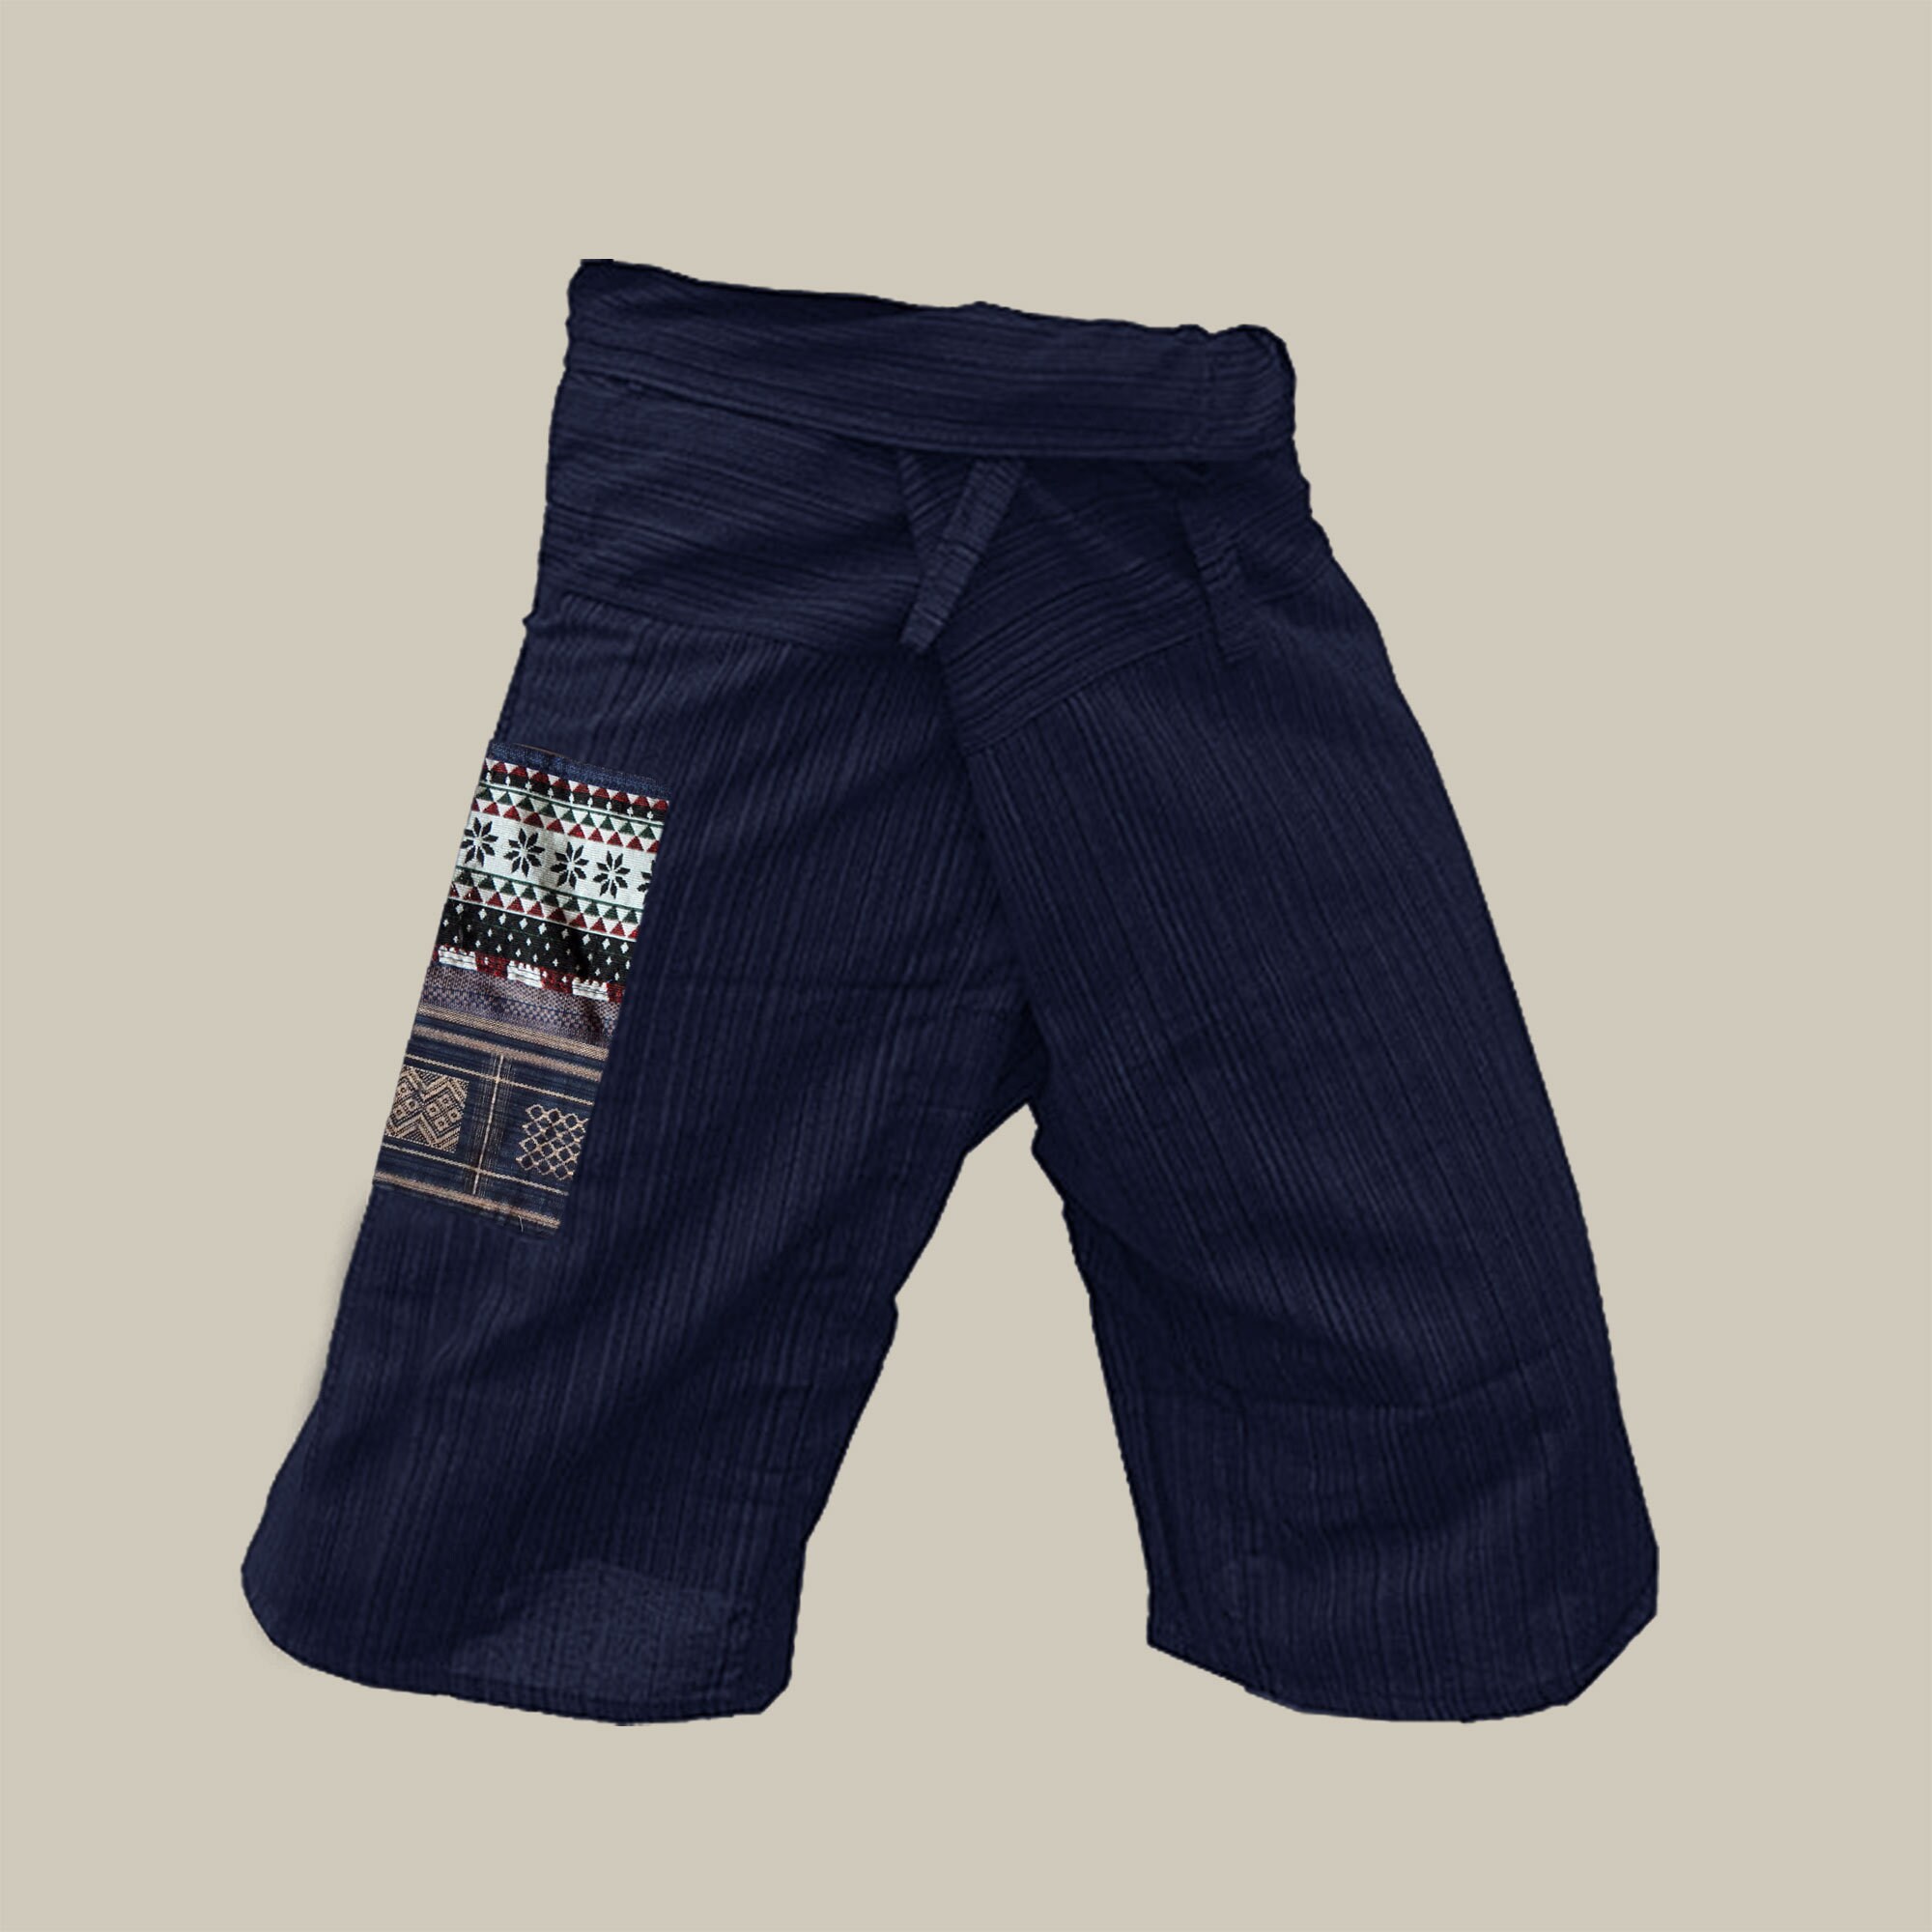 2019 Fisherman Pants Thai Fisherman Pants Cotton Shorts - Etsy